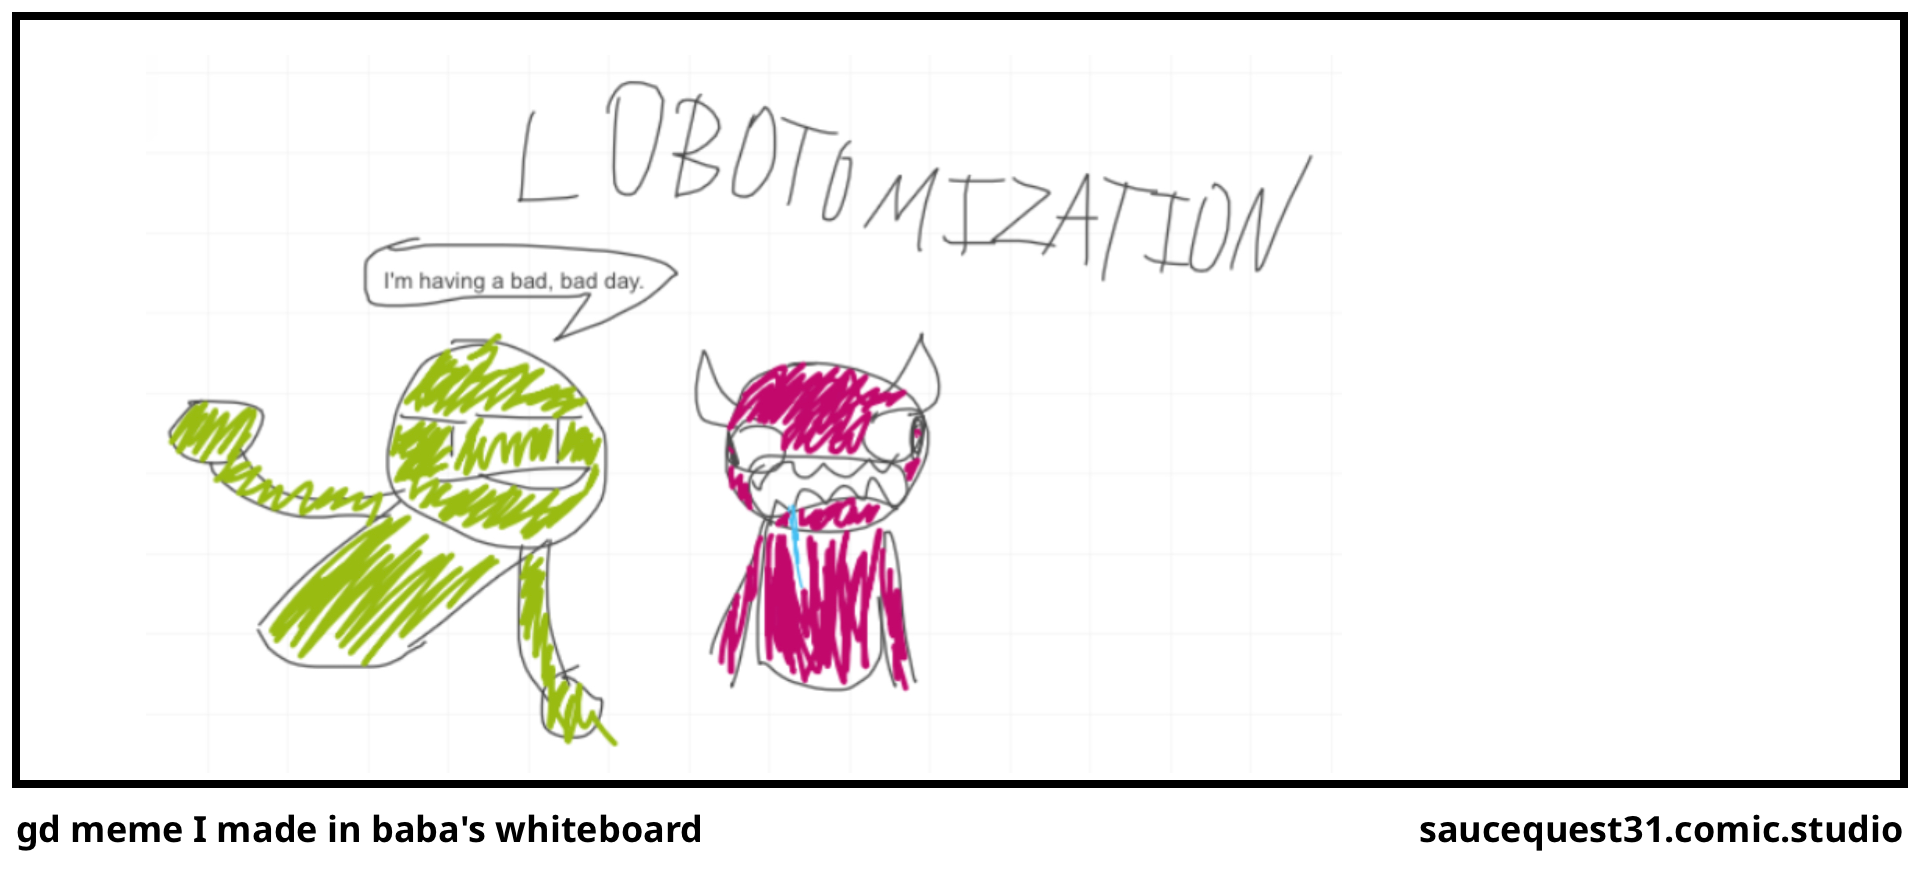 gd meme I made in baba's whiteboard